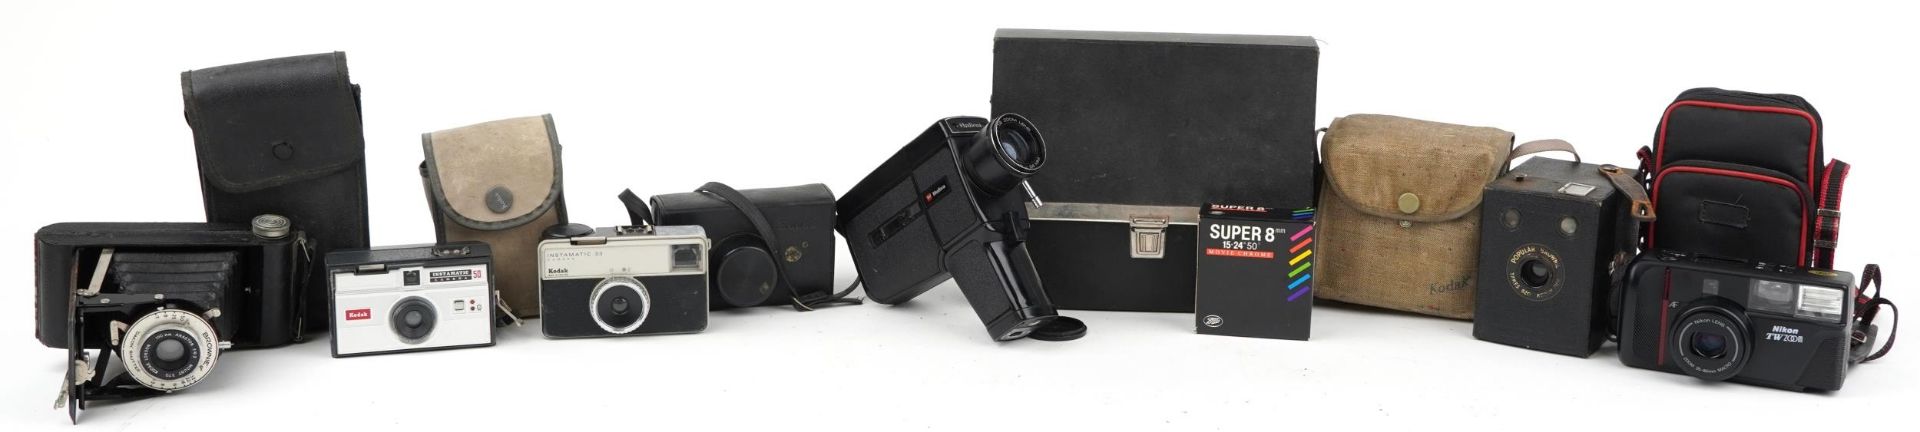 Six vintage cameras with cases including Super 8 movie camera, Kodak Brownie and Kodak